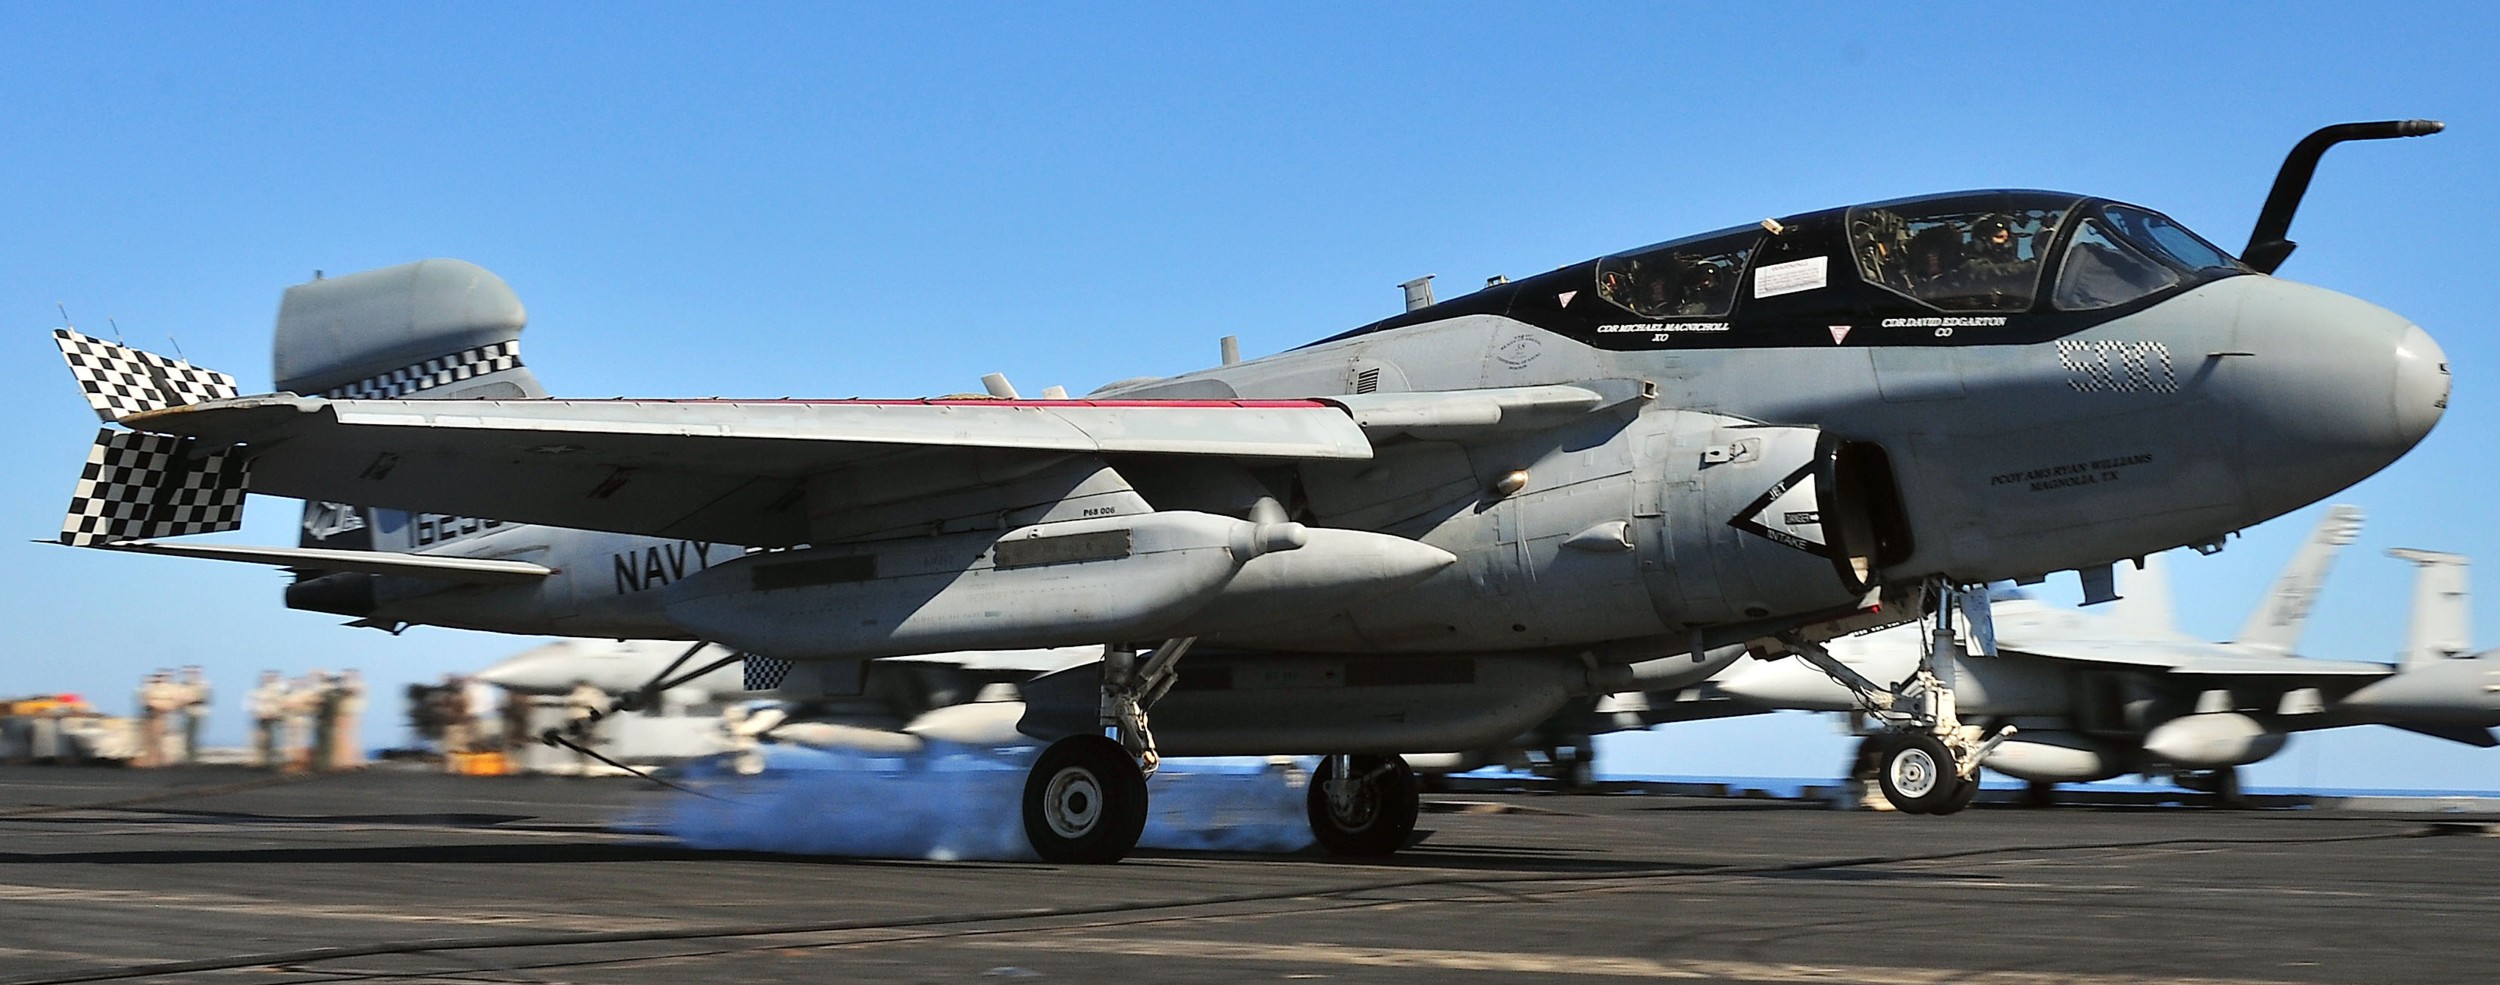 vaq-137 rooks electronic attack squadron us navy ea-6b prowler carrier air wing cvw-1 uss enterprise cvn-65 29